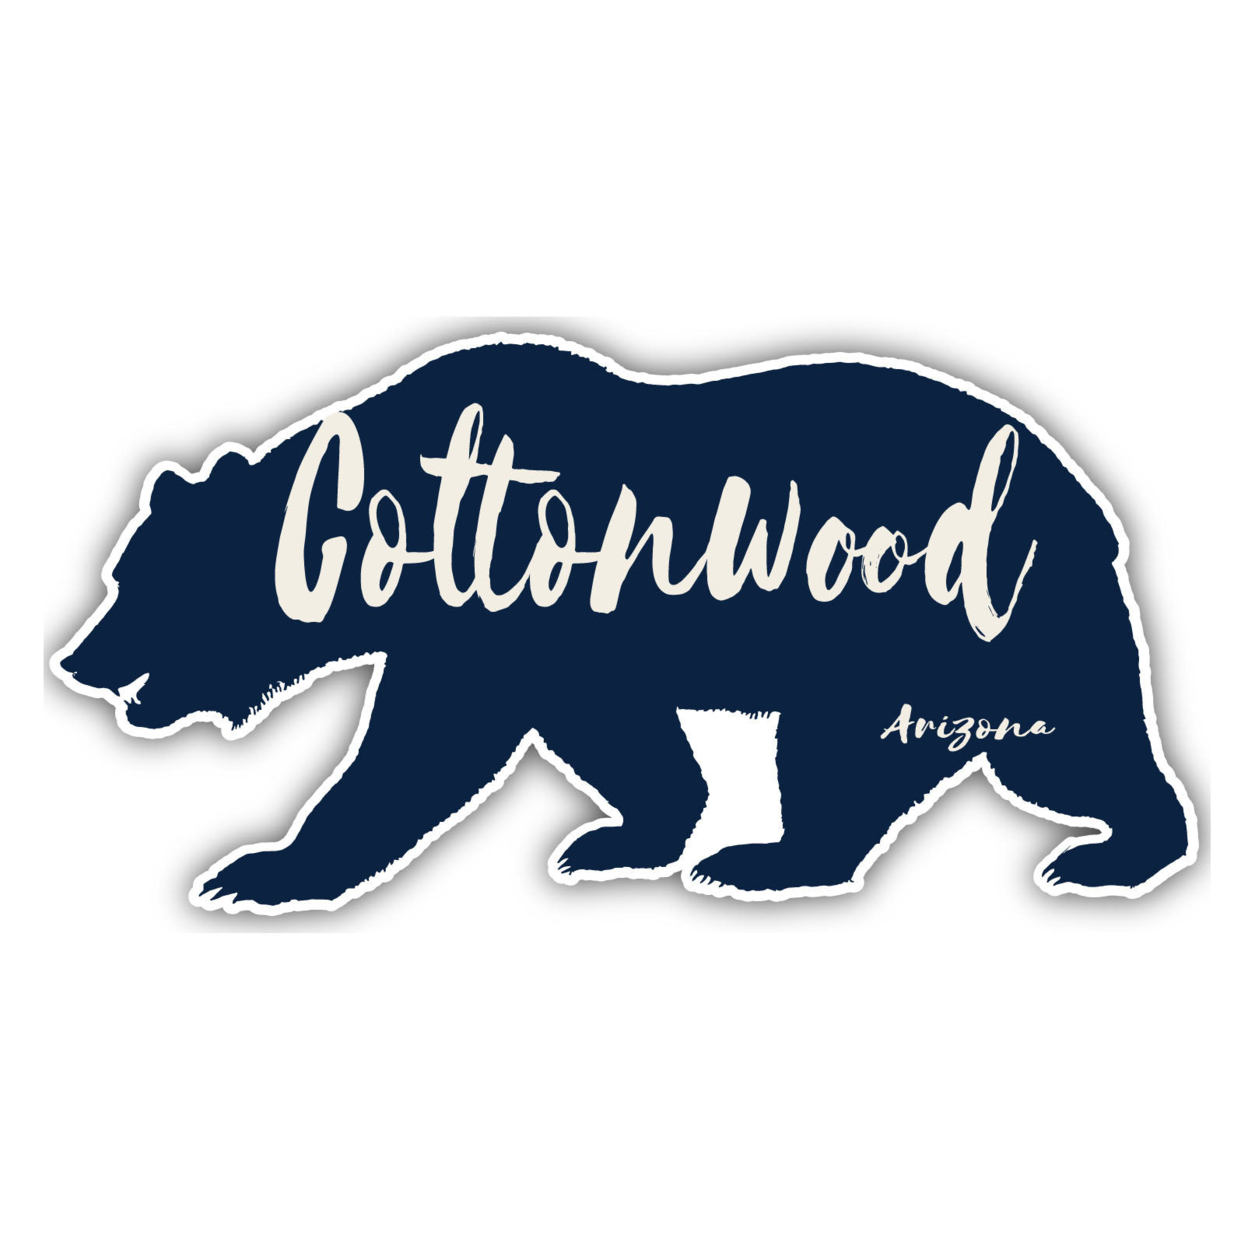 Cottonwood Arizona Souvenir Decorative Stickers (Choose Theme And Size) - Single Unit, 6-Inch, Camp Life